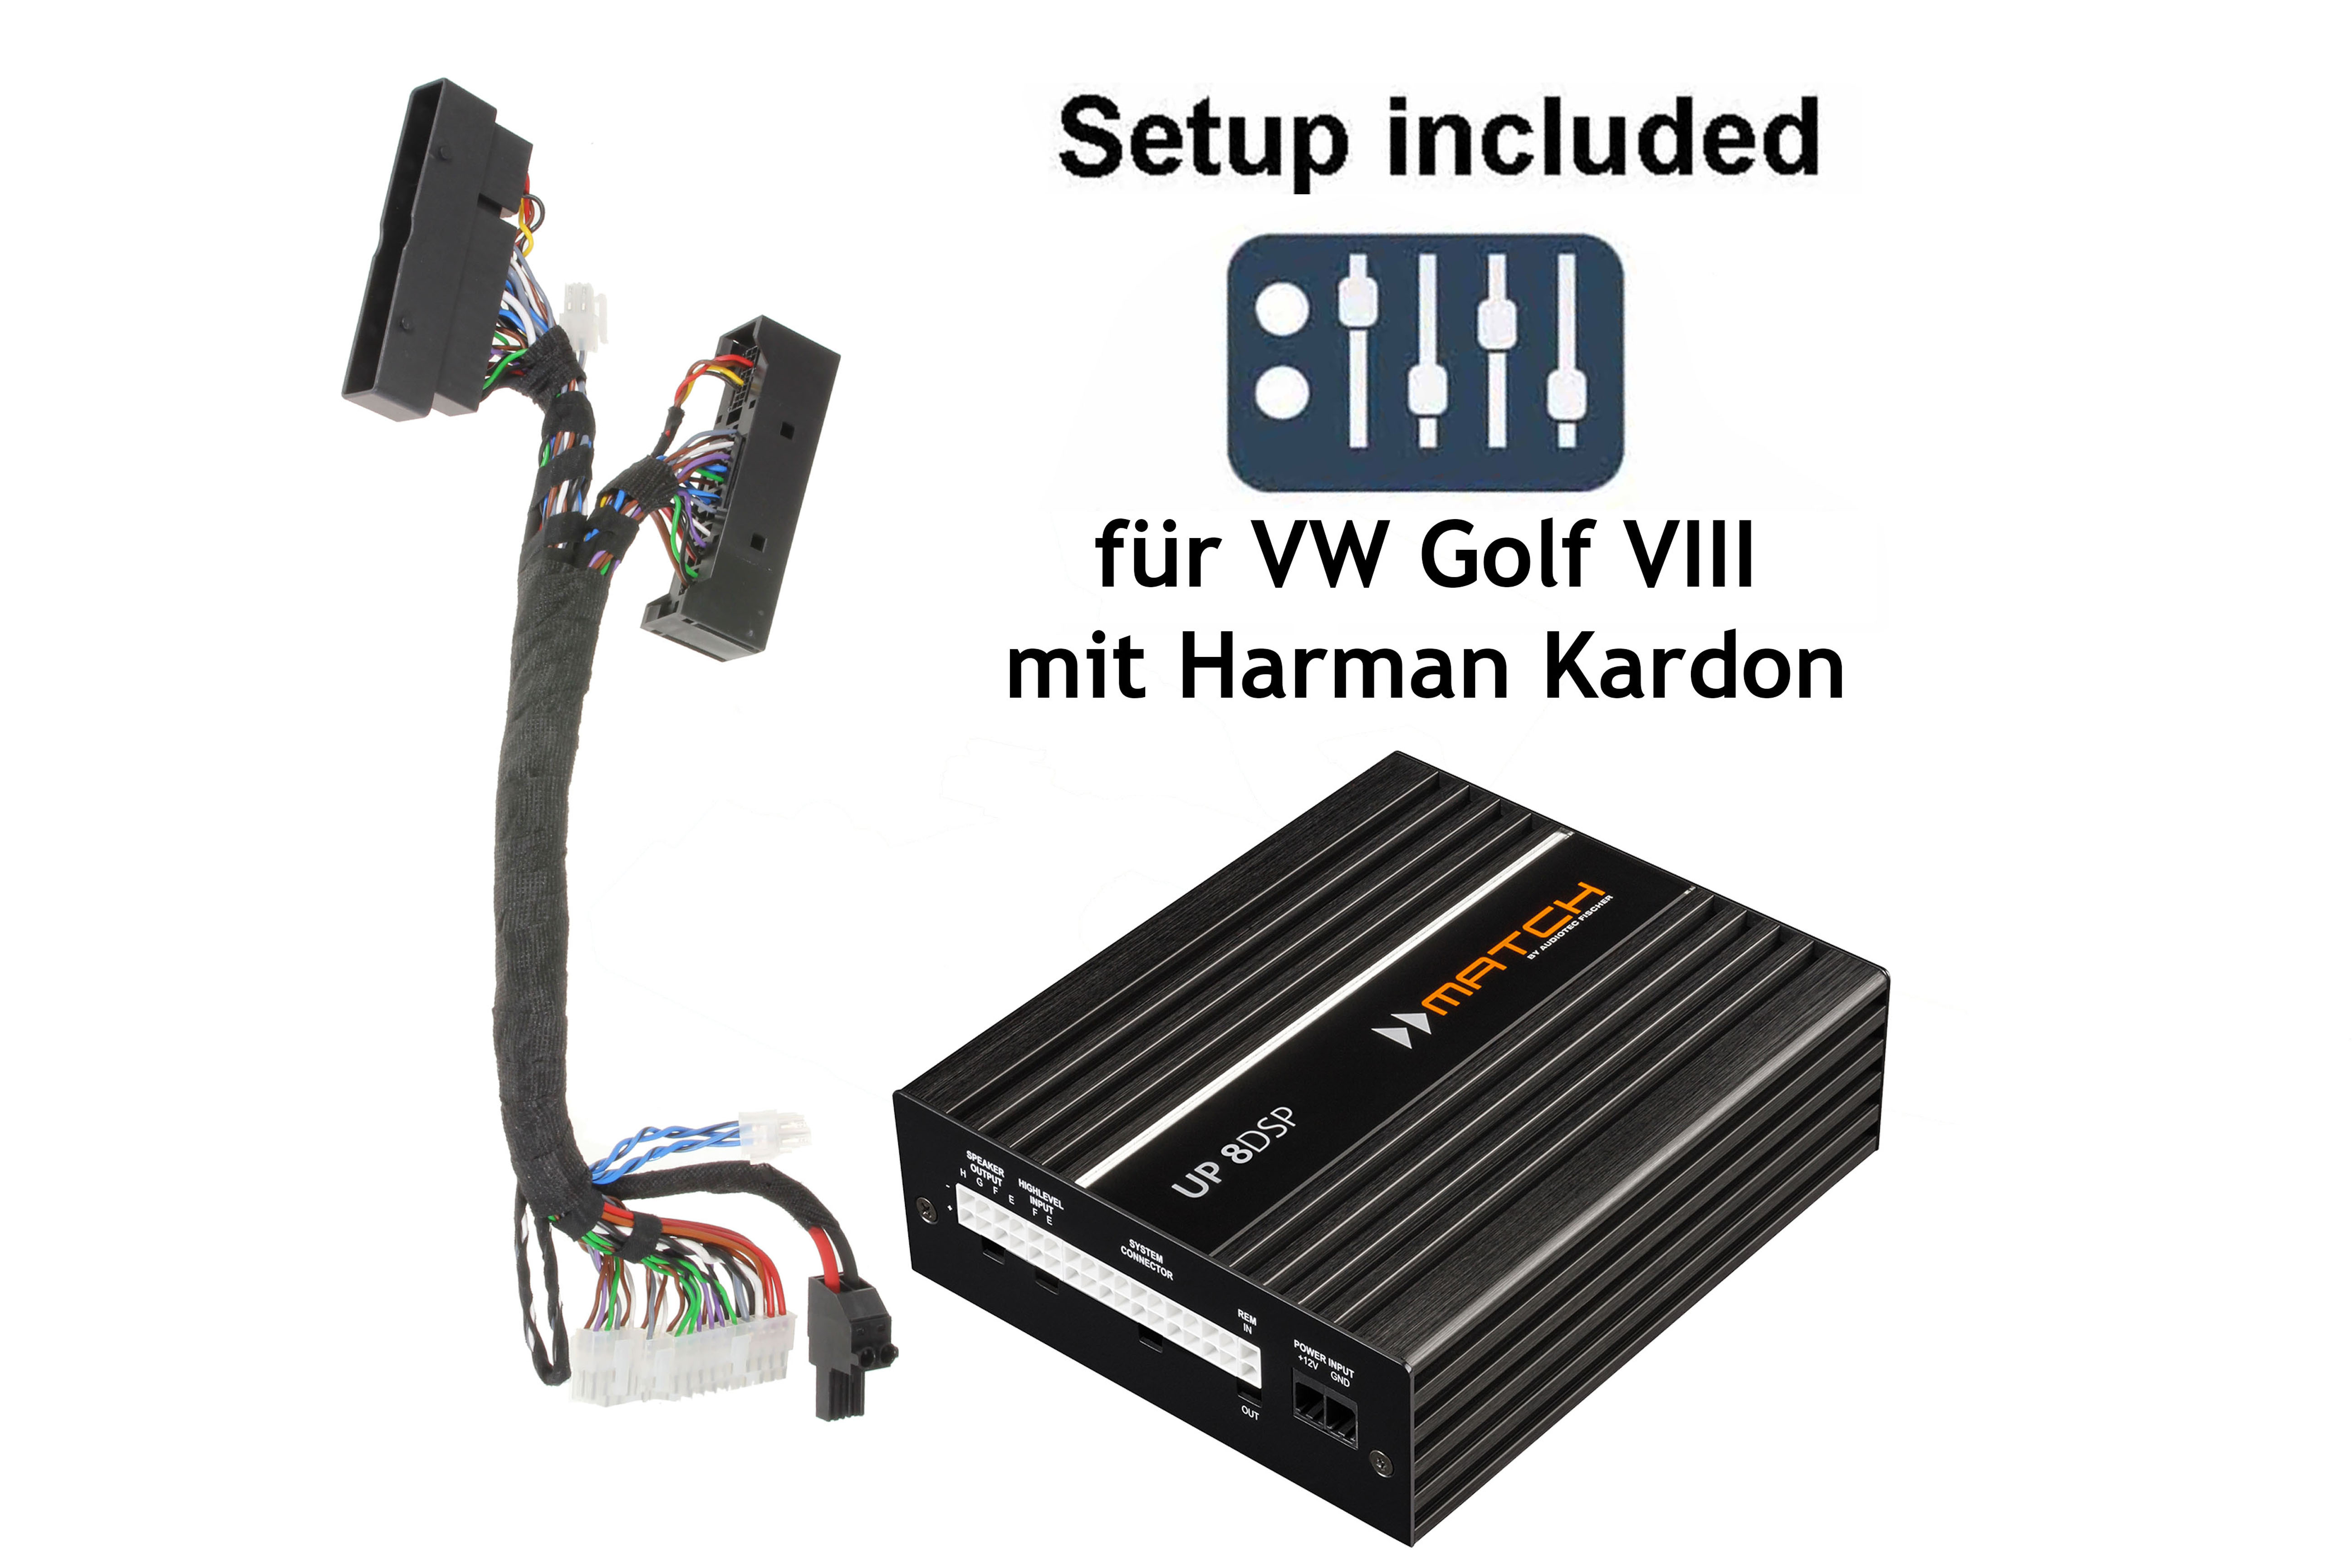 VW Golf 8 mit Harman Kardon, Soundupgrade-Set, Plug&Play DSP-Verstärker, für VW, Audi, Seat, Skoda, Plug & Play - Systeme